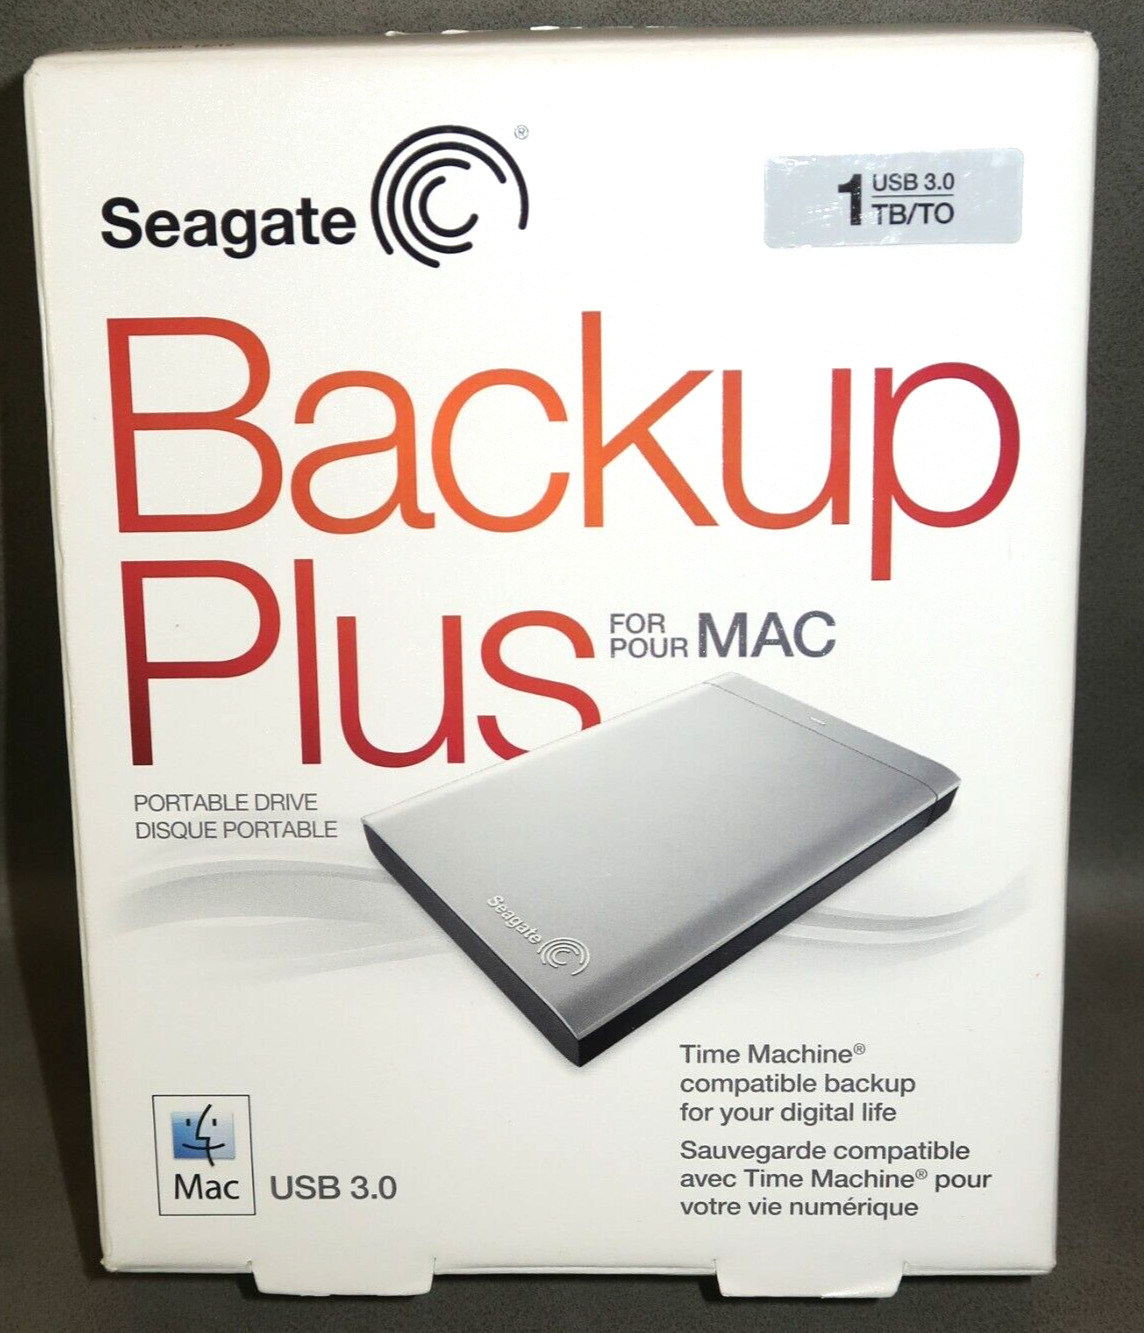 NEW Seagate Backup Plus for Pour MAC Portable Drive 1 TB USB 3.0